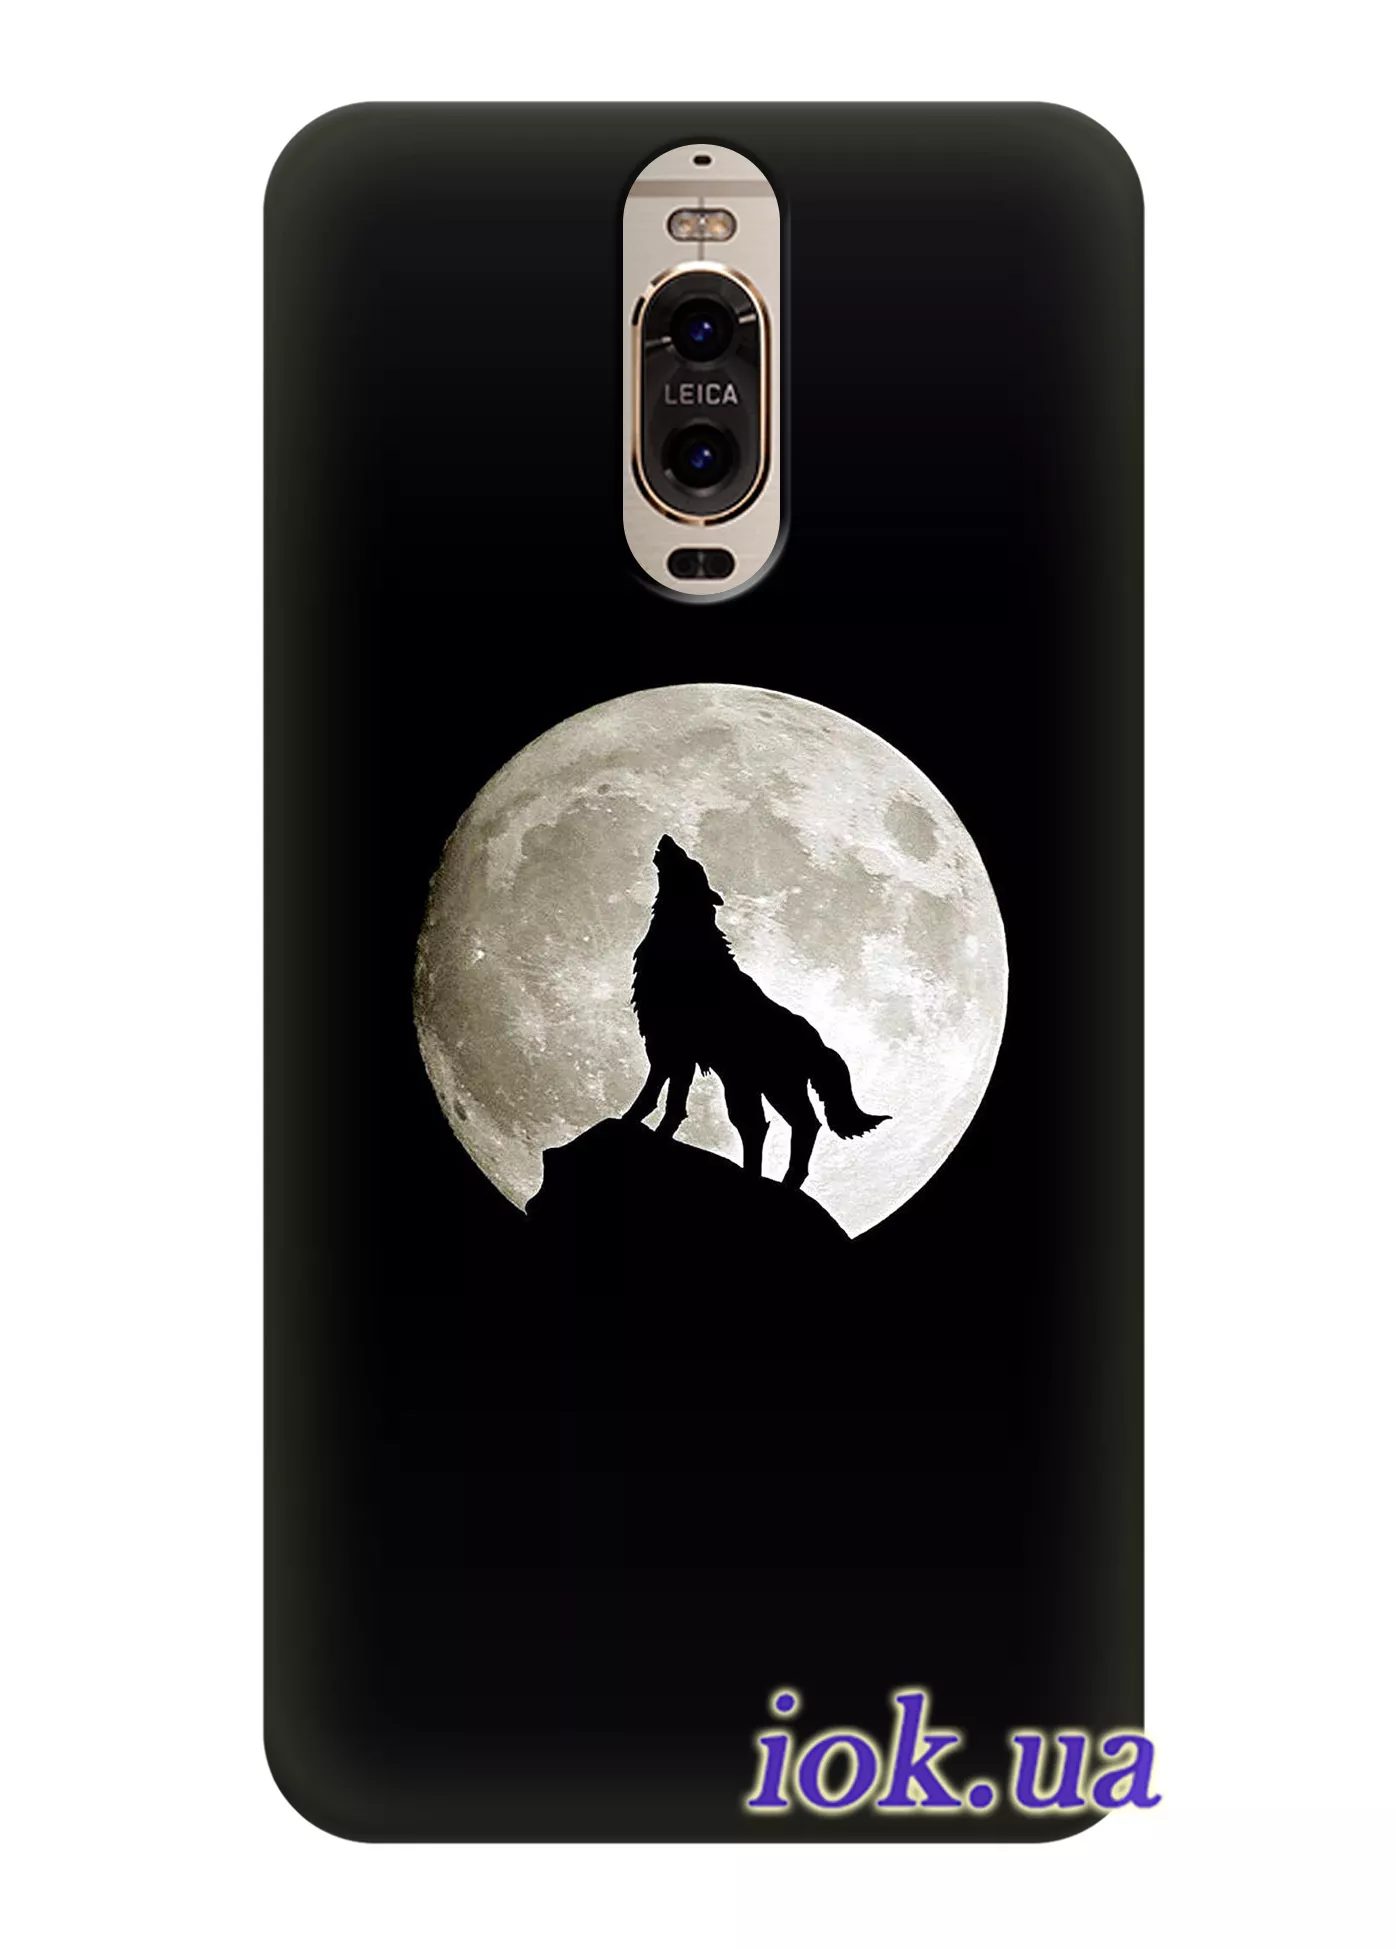 Чехол для Huawei Mate 9 Pro - Одинокий волк